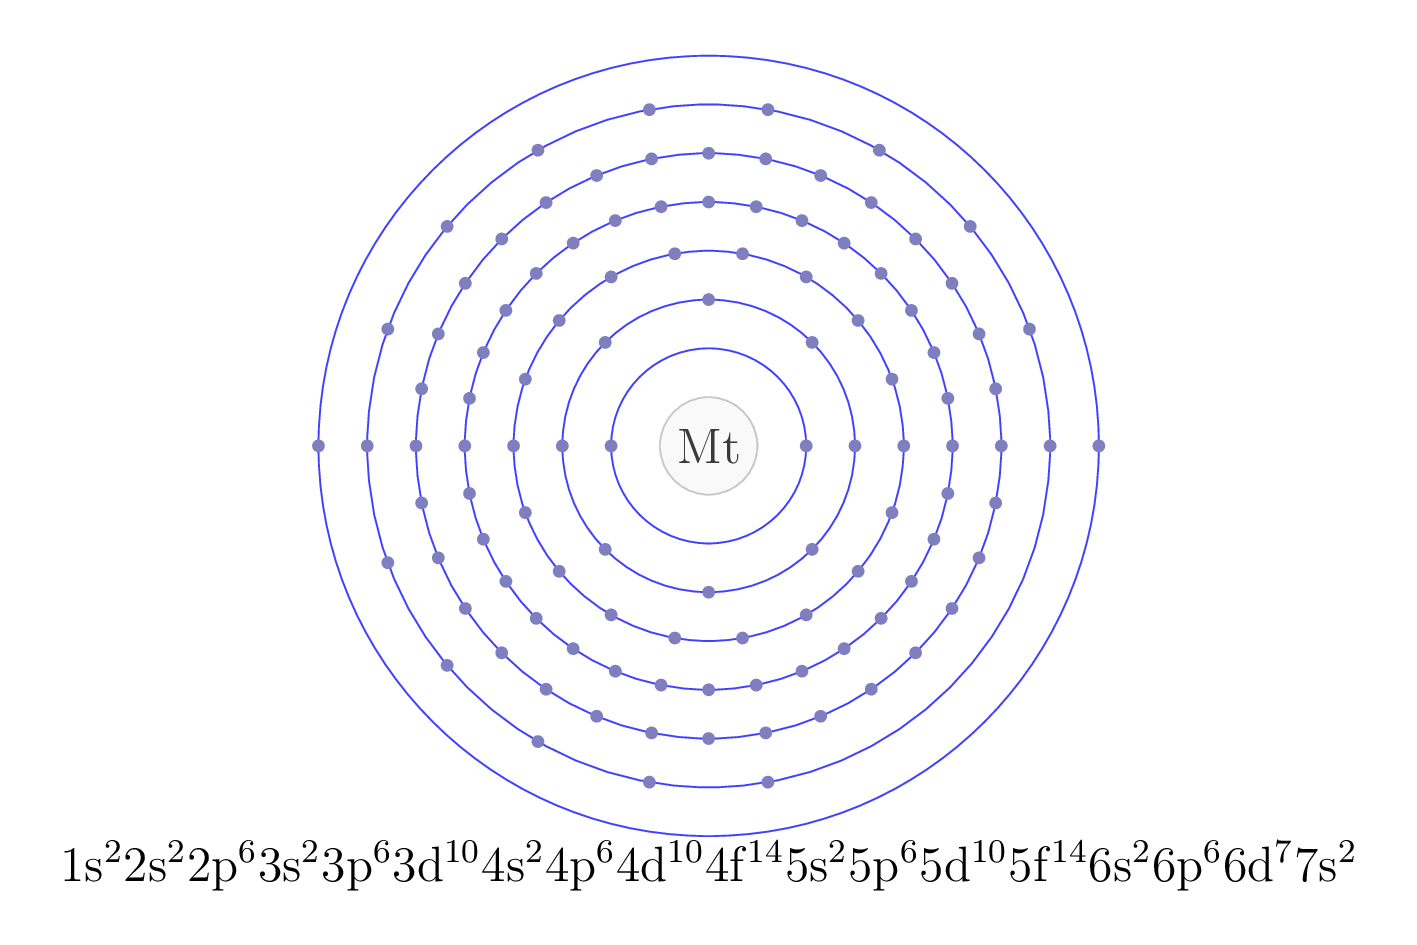 electron configuration of element Mt